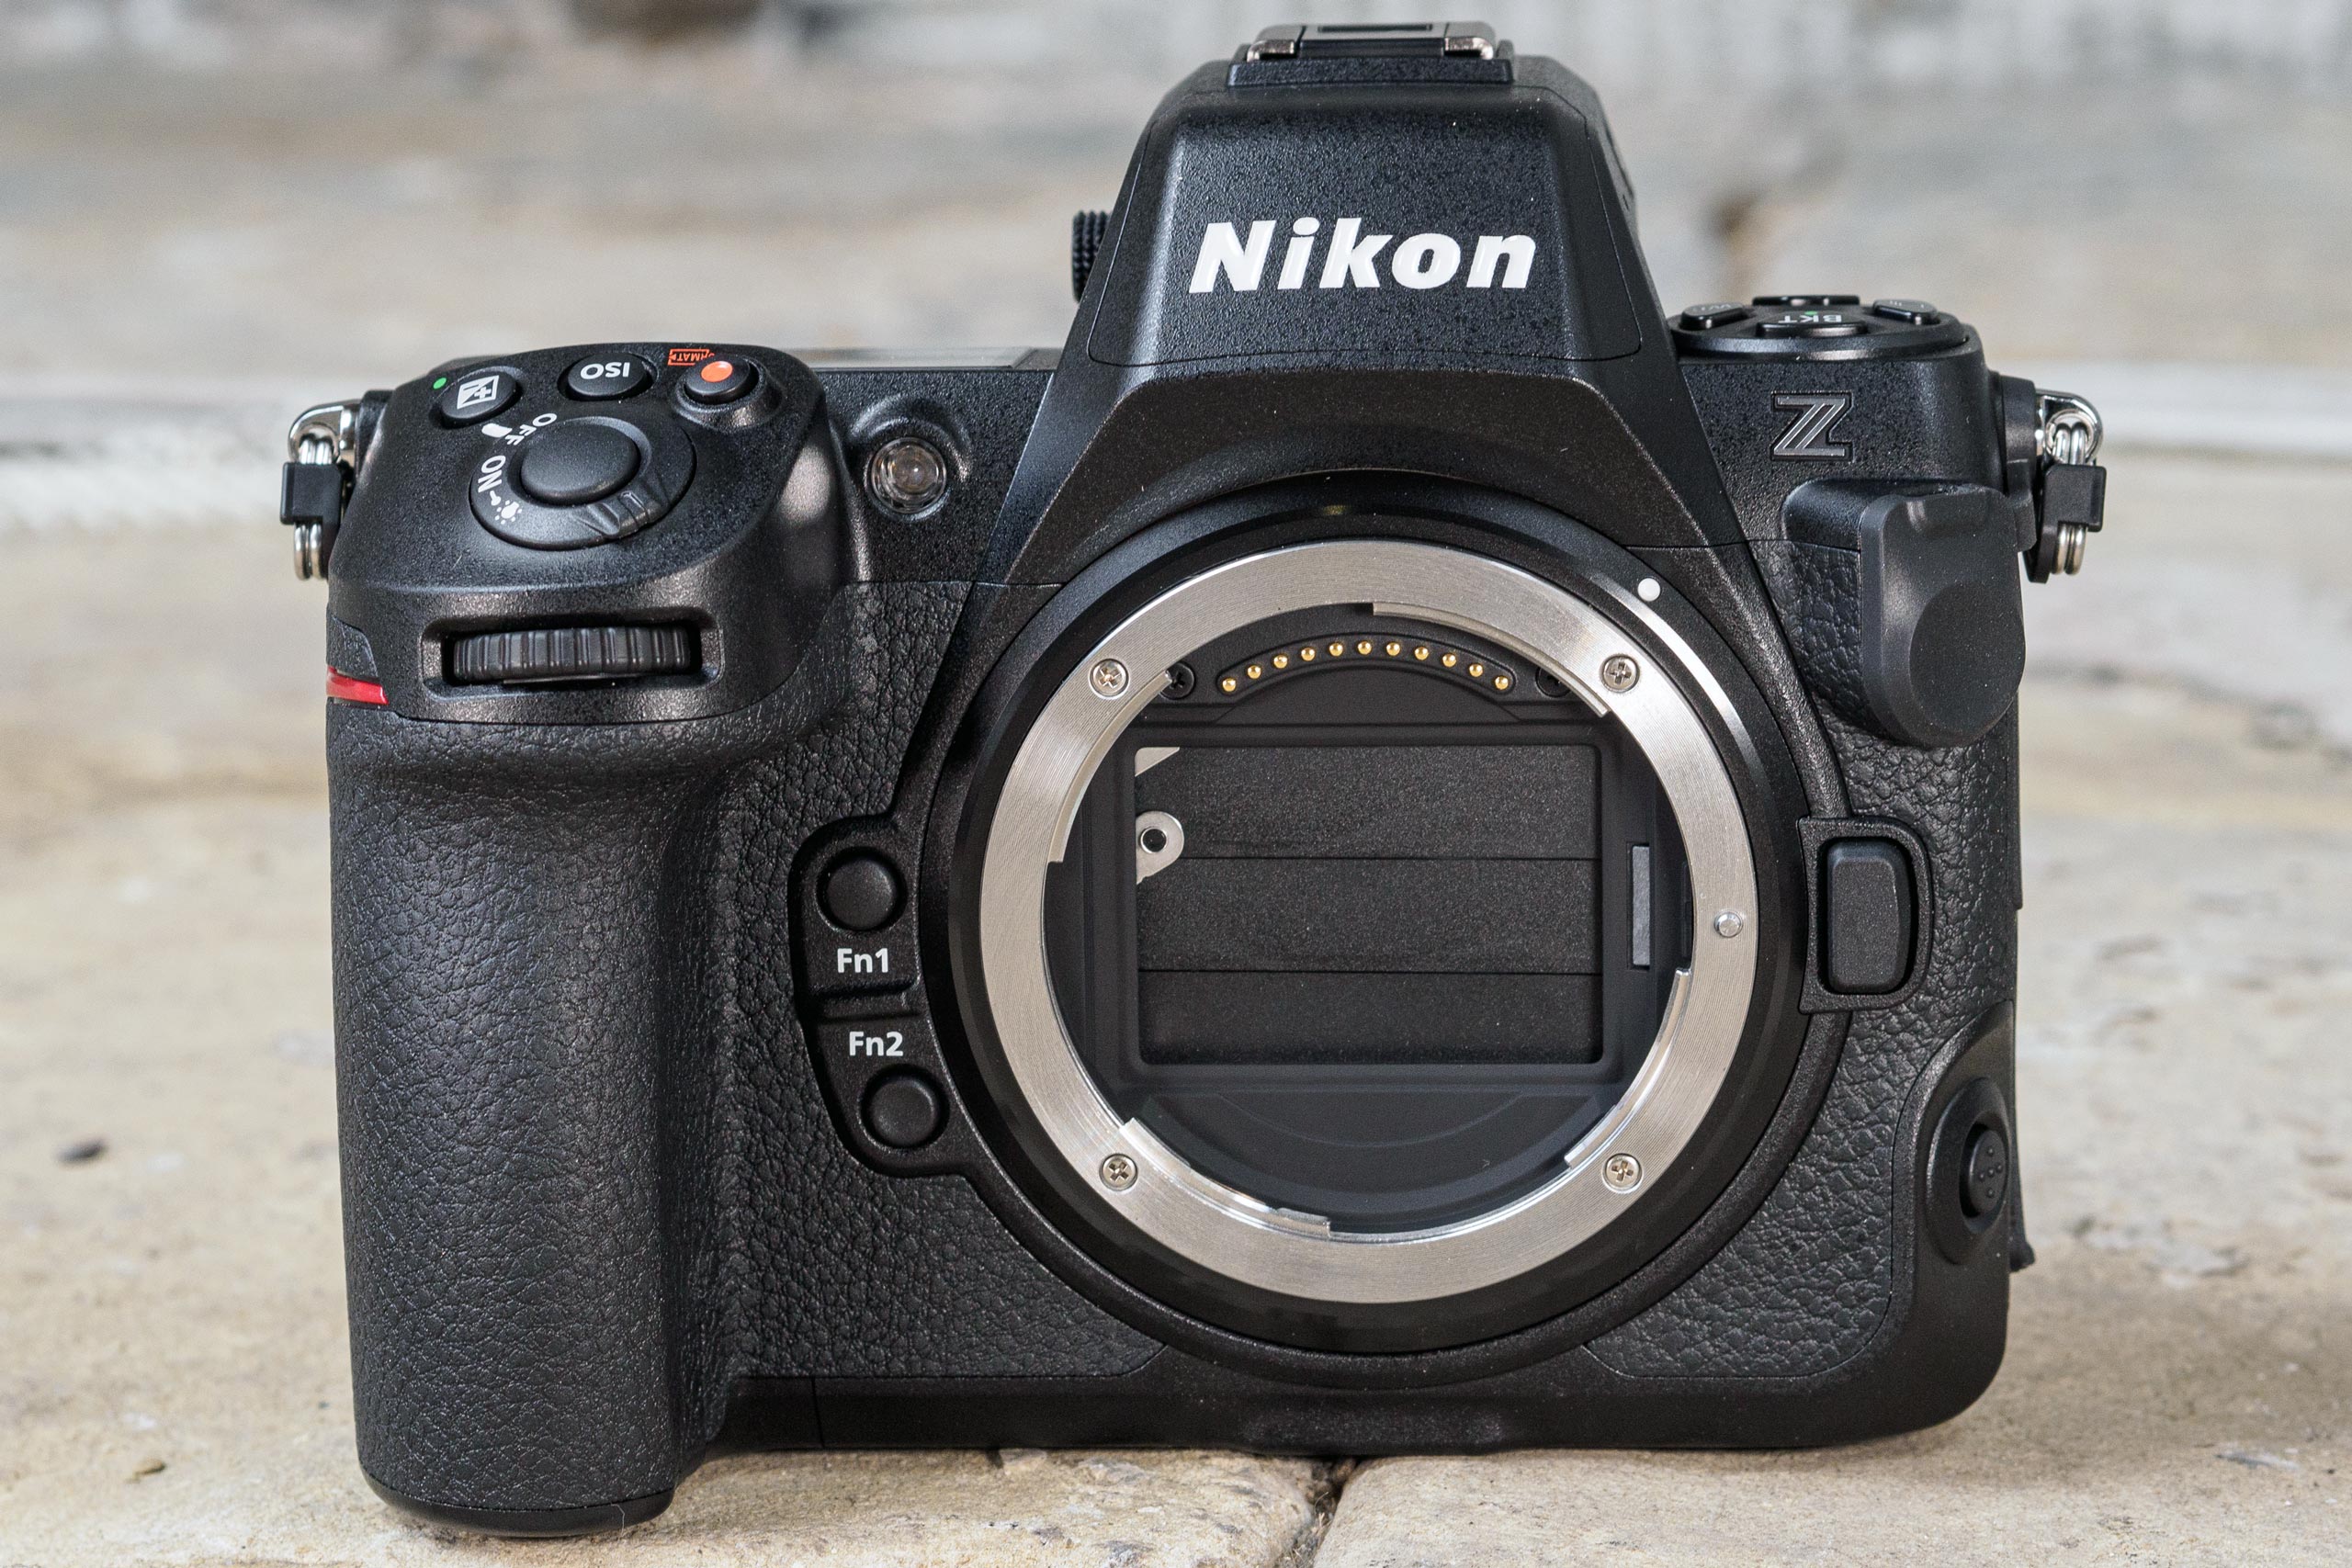 Nikon Z8 mirrorless camera review: Smaller, faster, cheaper, better